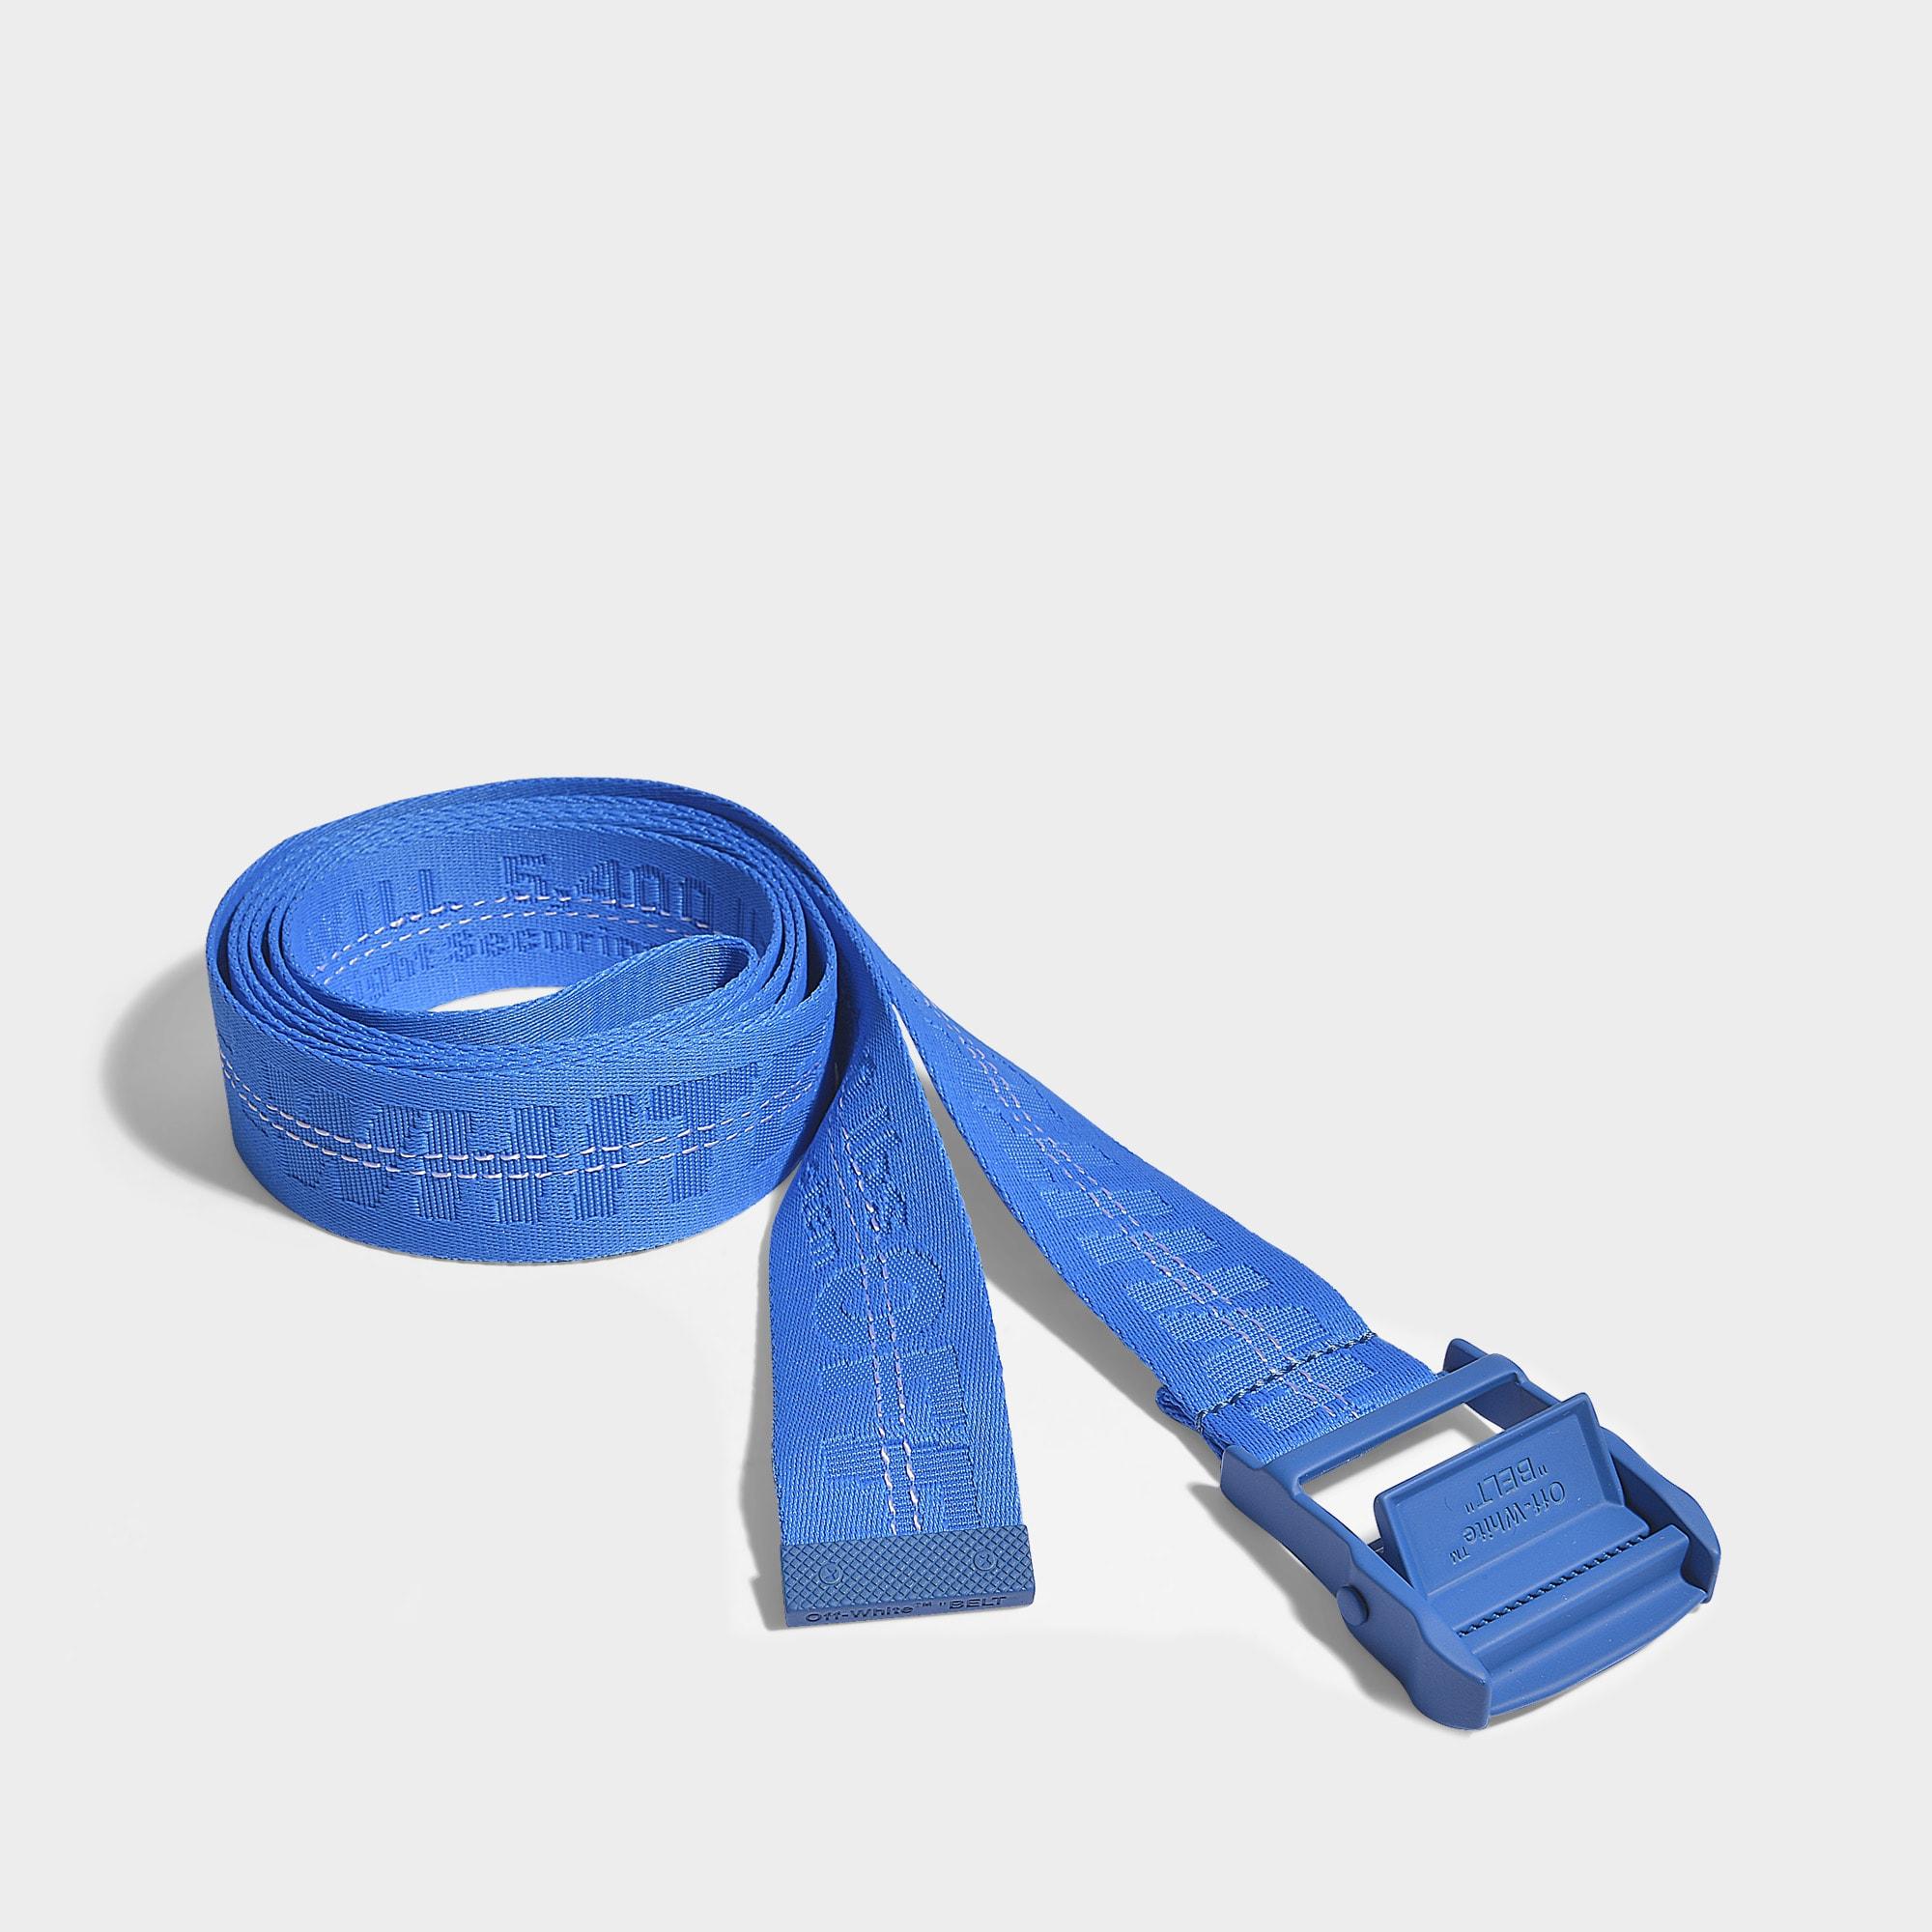 Best Of blue off white belt Blue belt industrial mini off bids